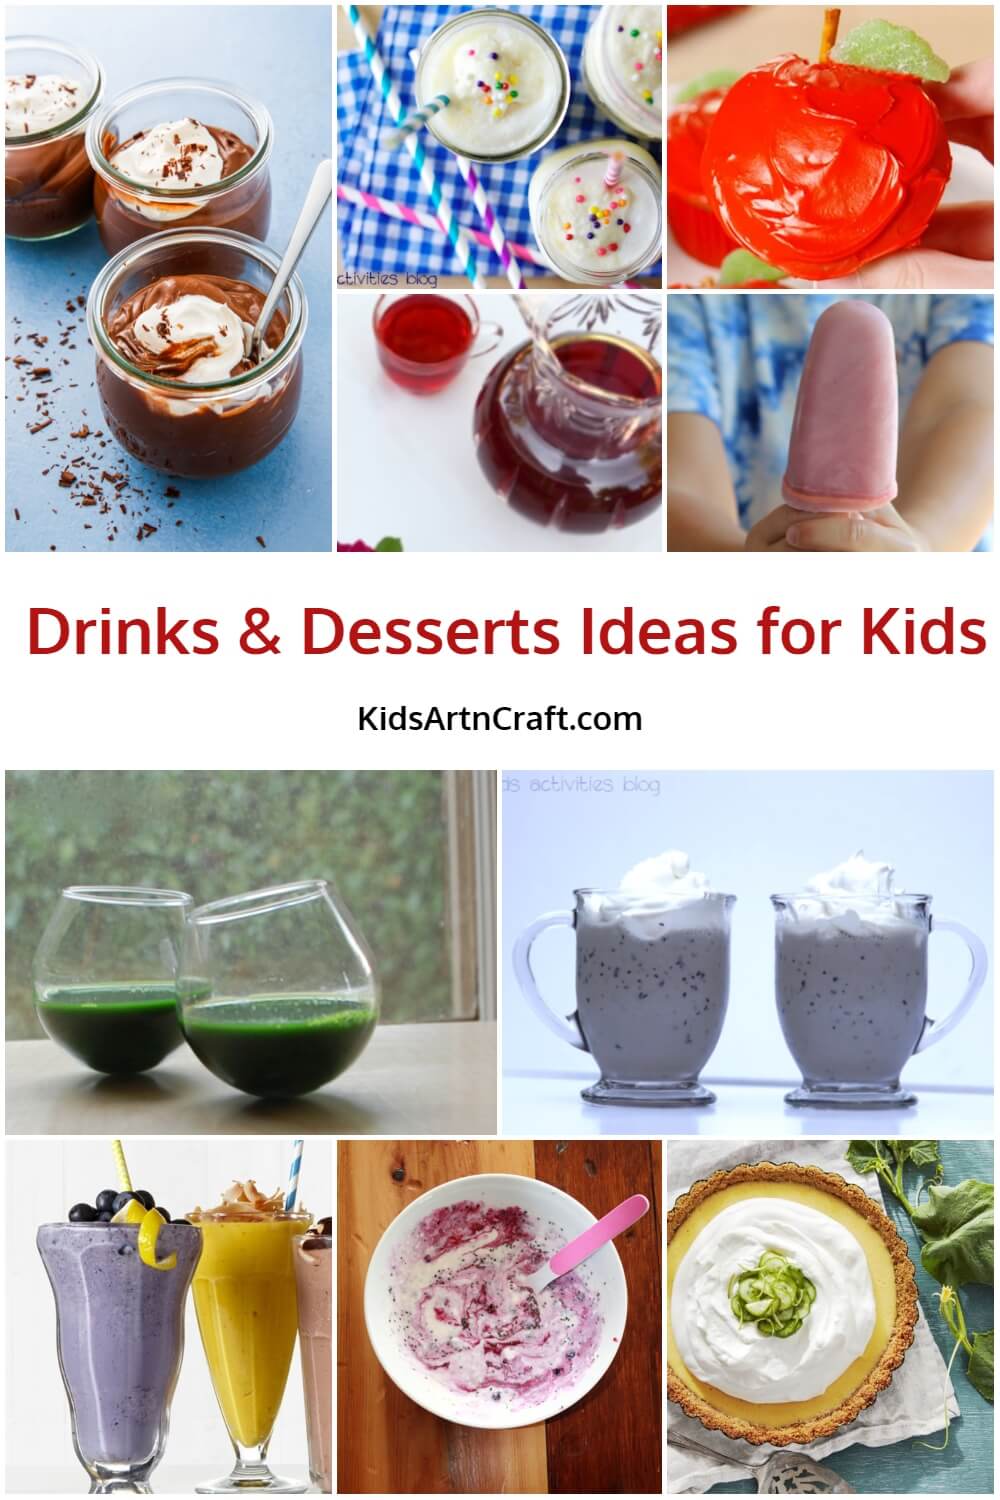 Drinks & Desserts Ideas for Kids